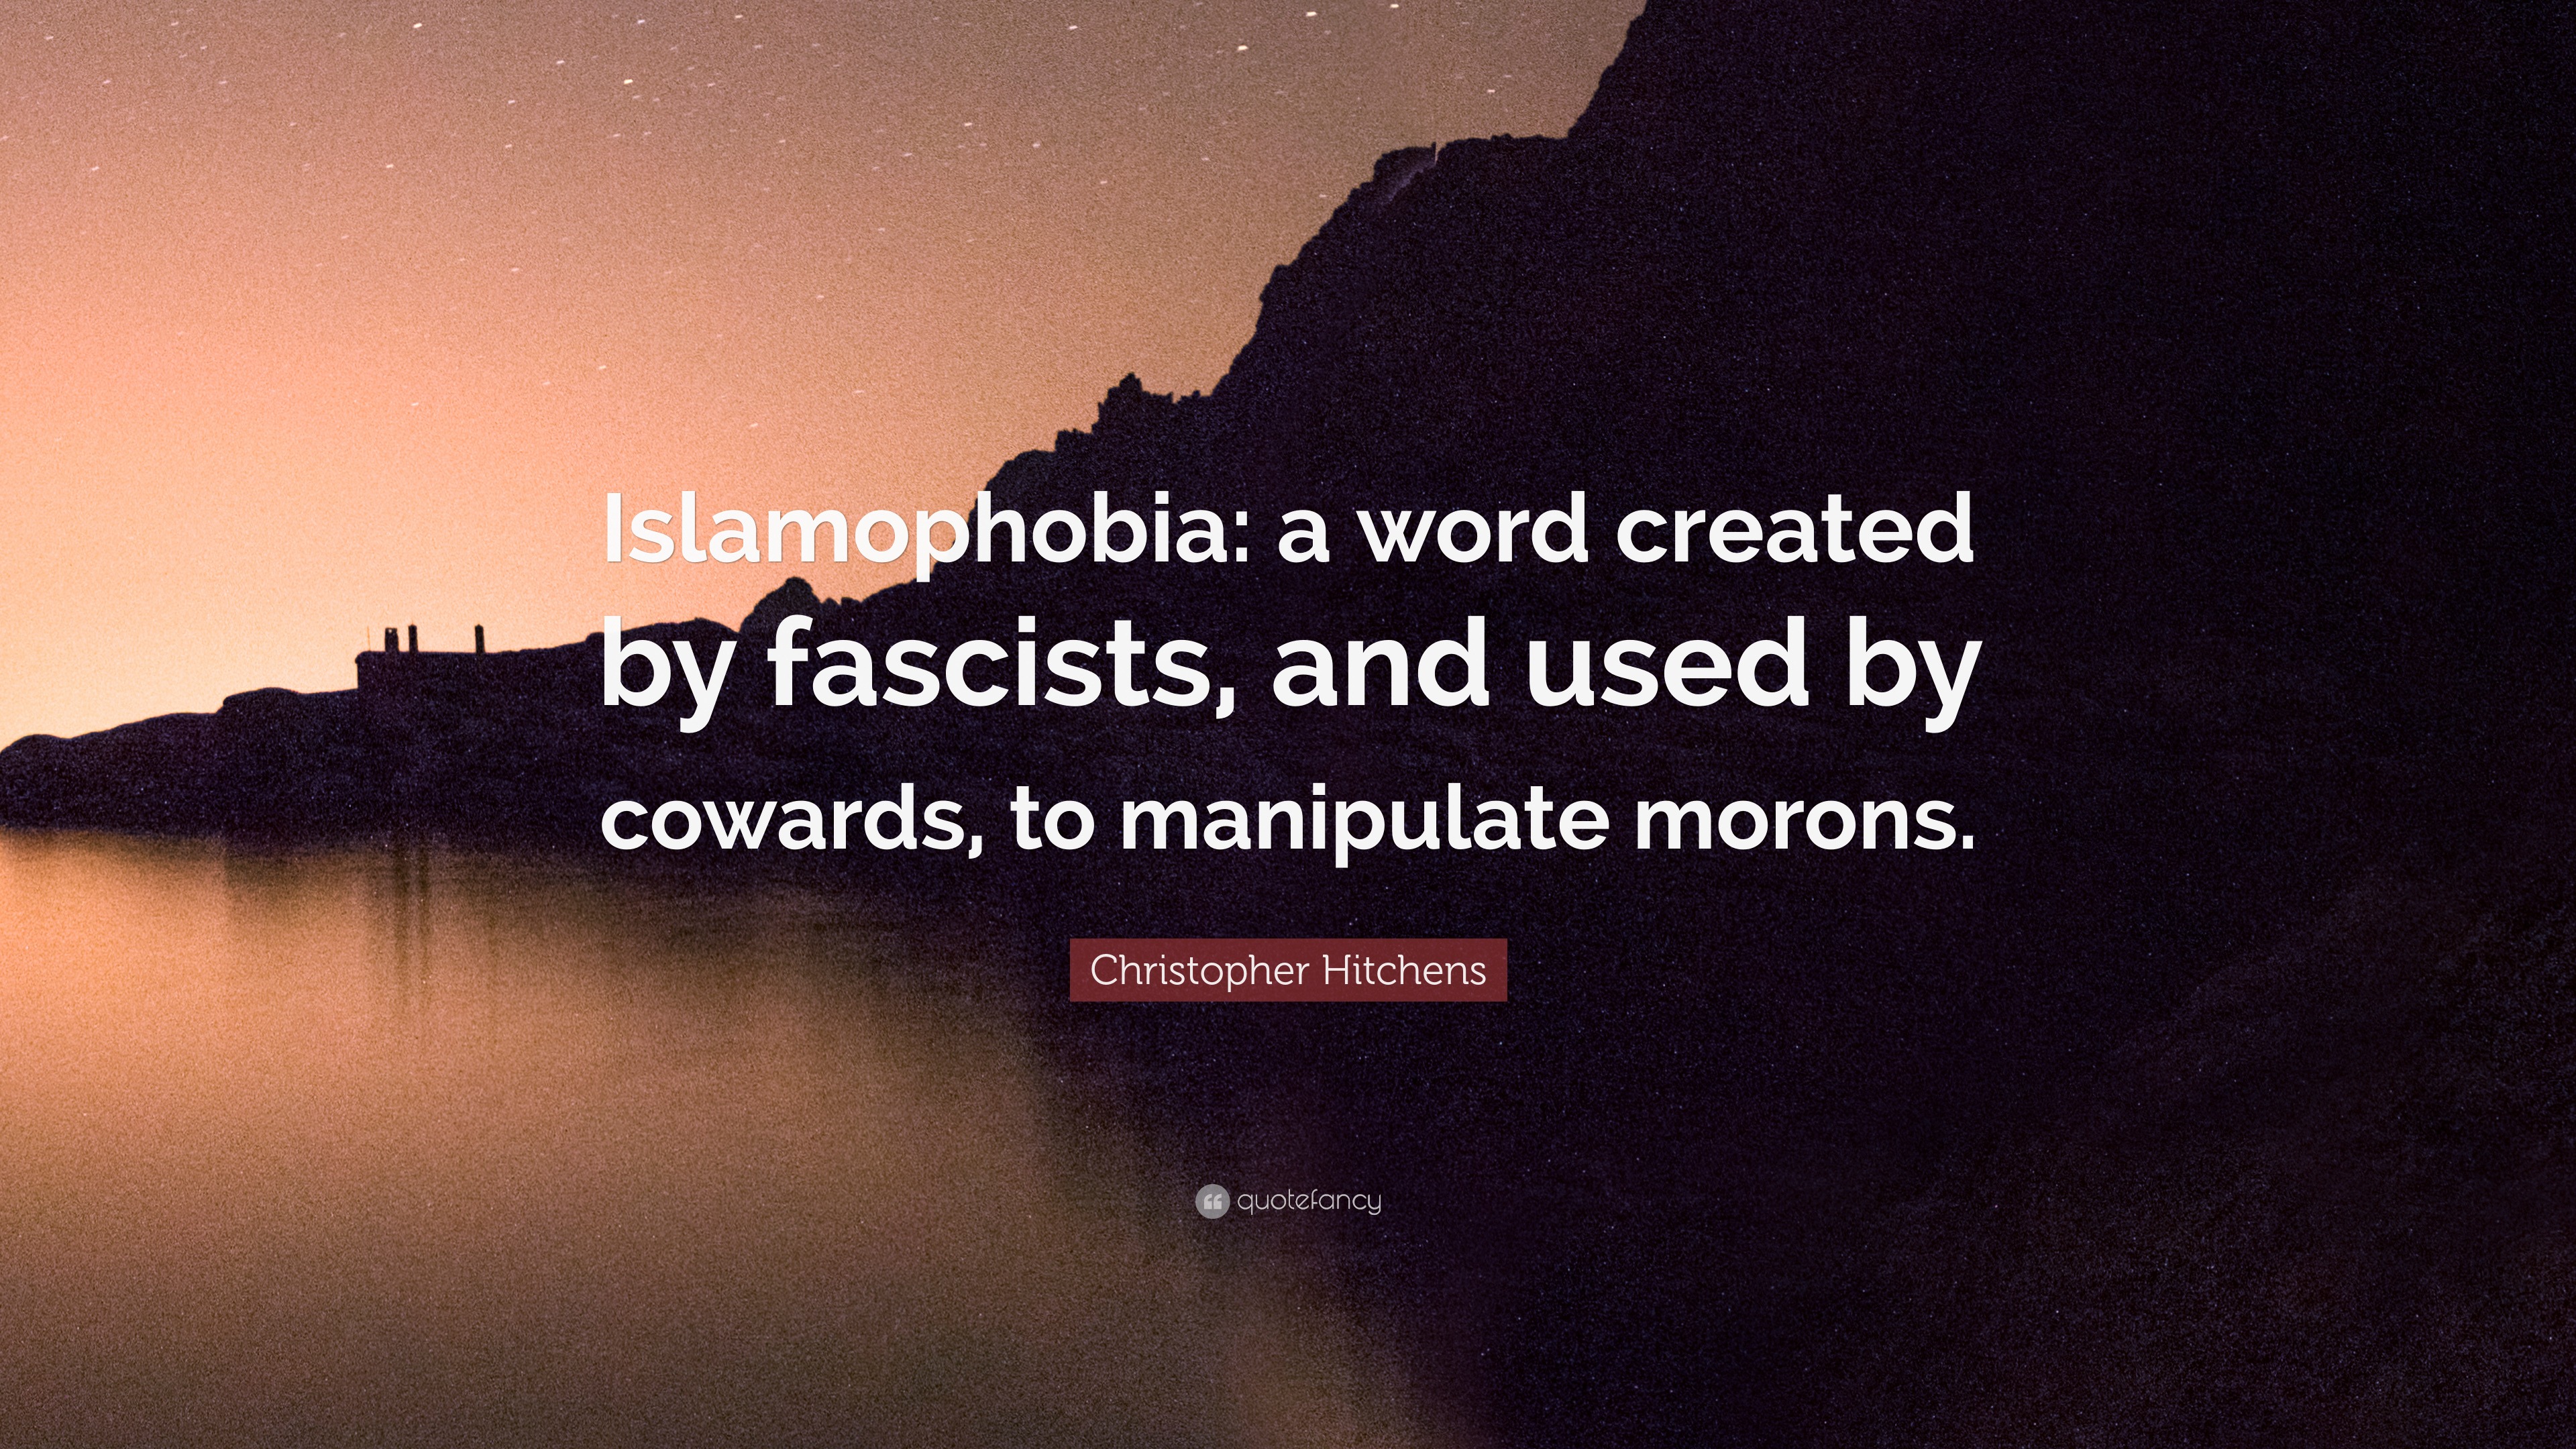 Quotes on islamophobia